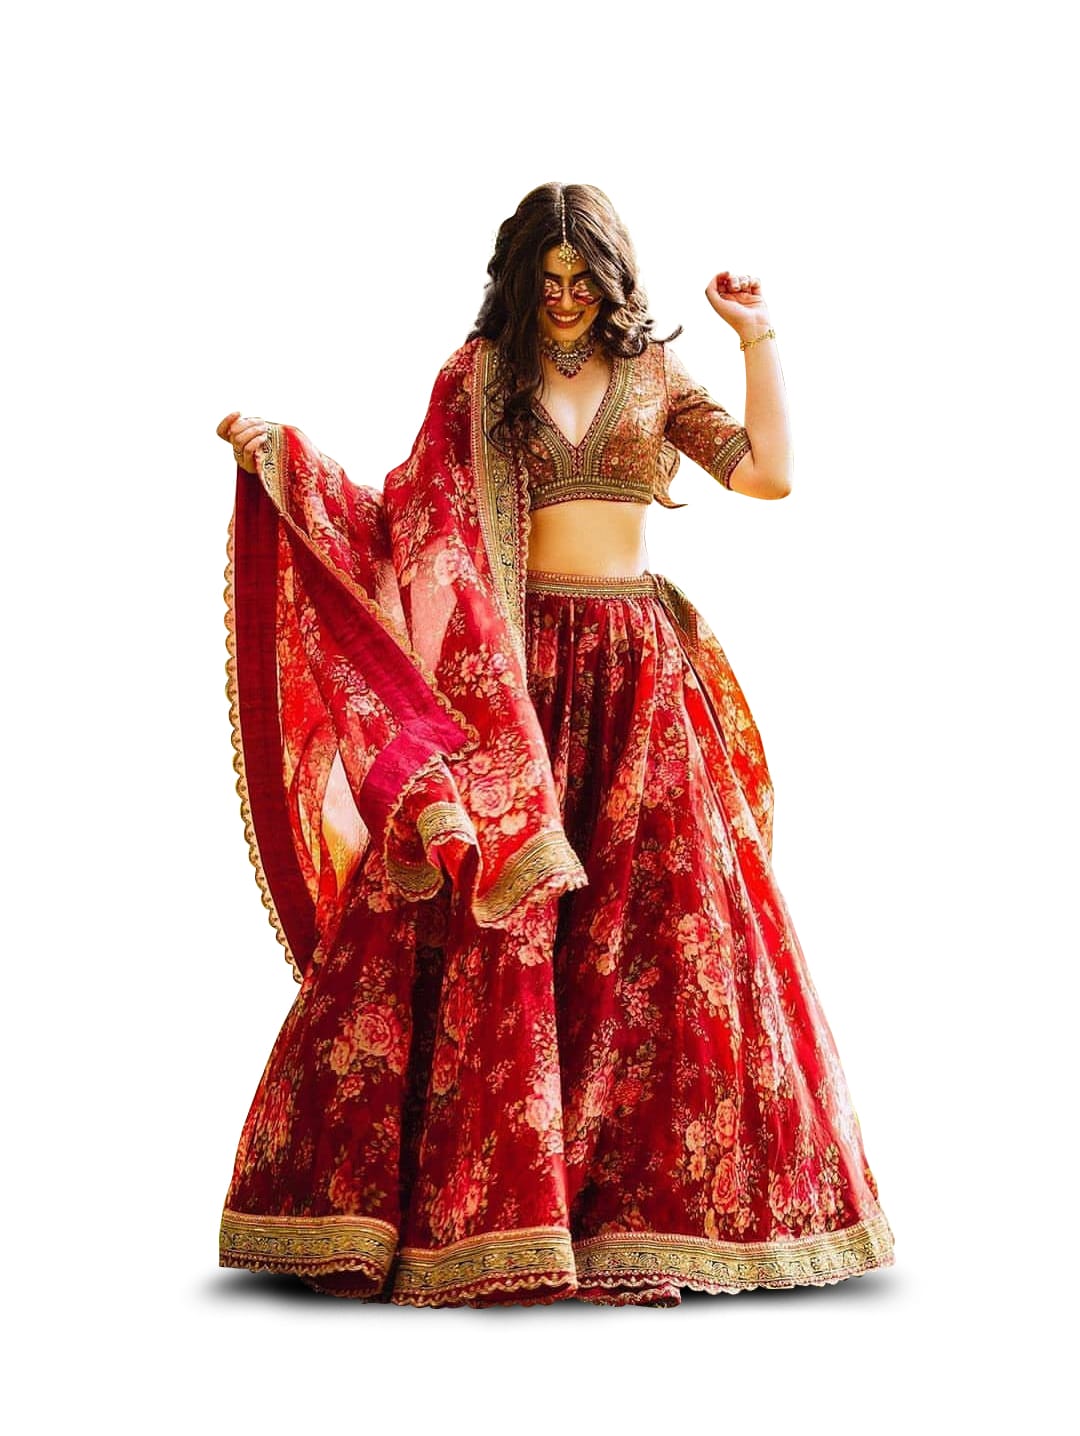 Sabysachi Bride in Red Floral Lehenga - Shaadiwish